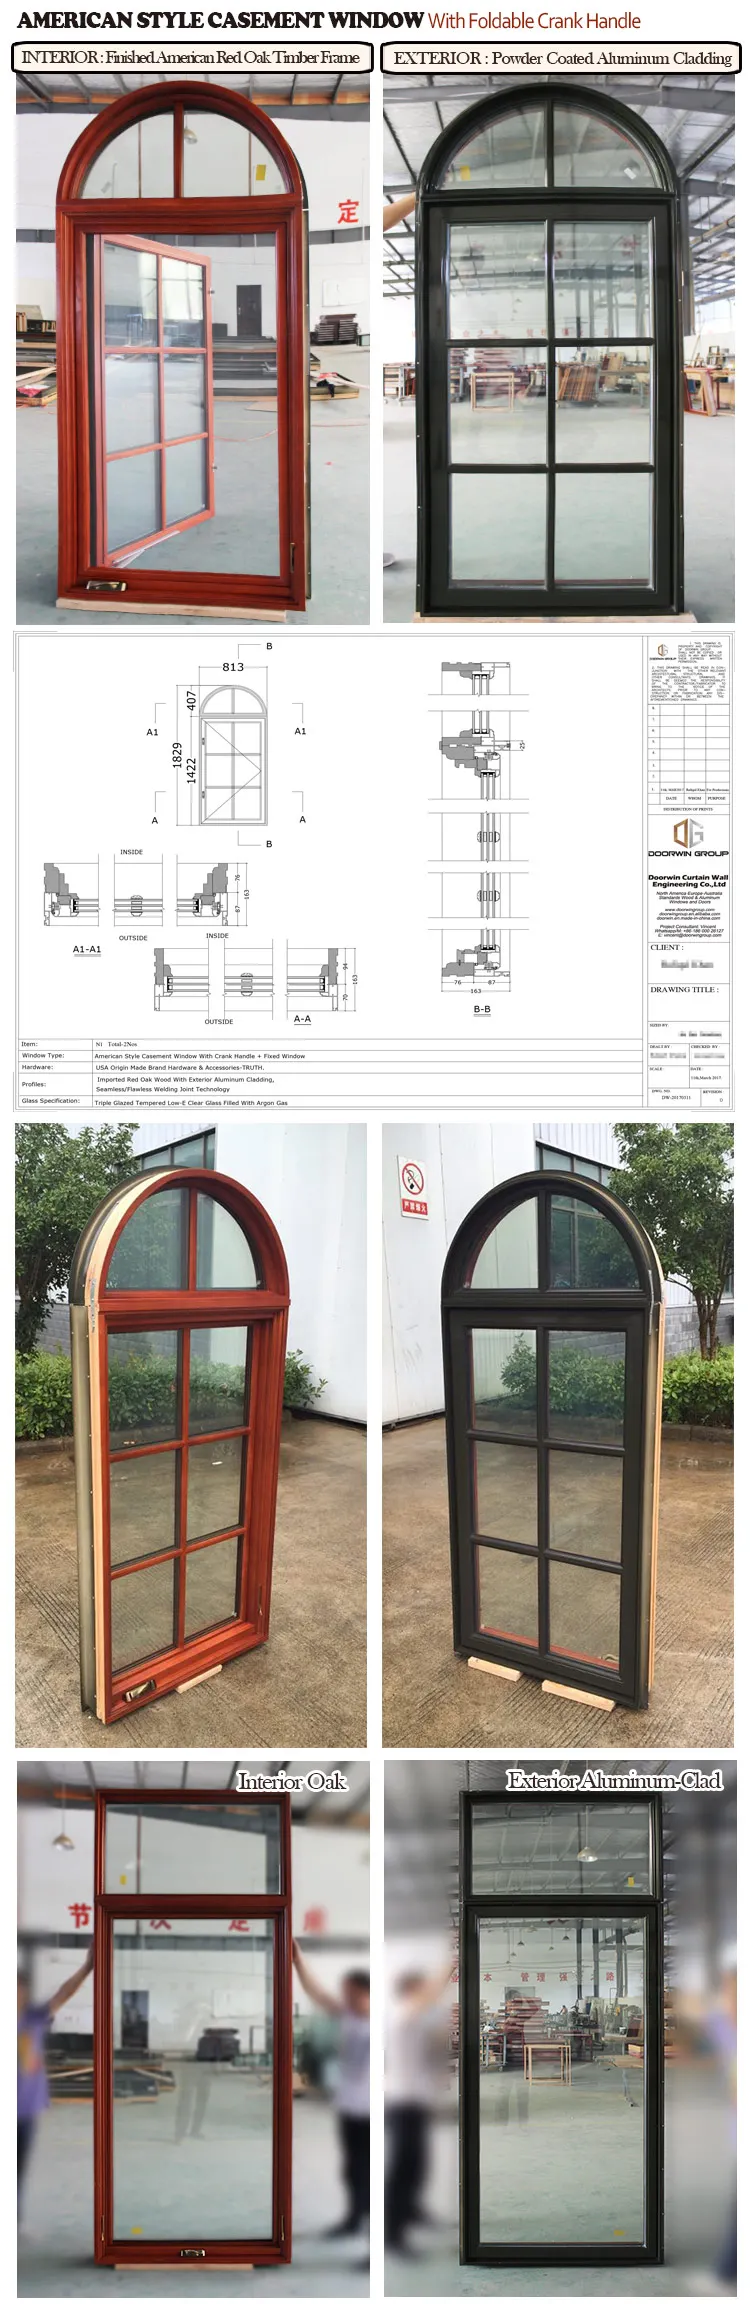 Super September Purchasing solid wood crank open window arch window design